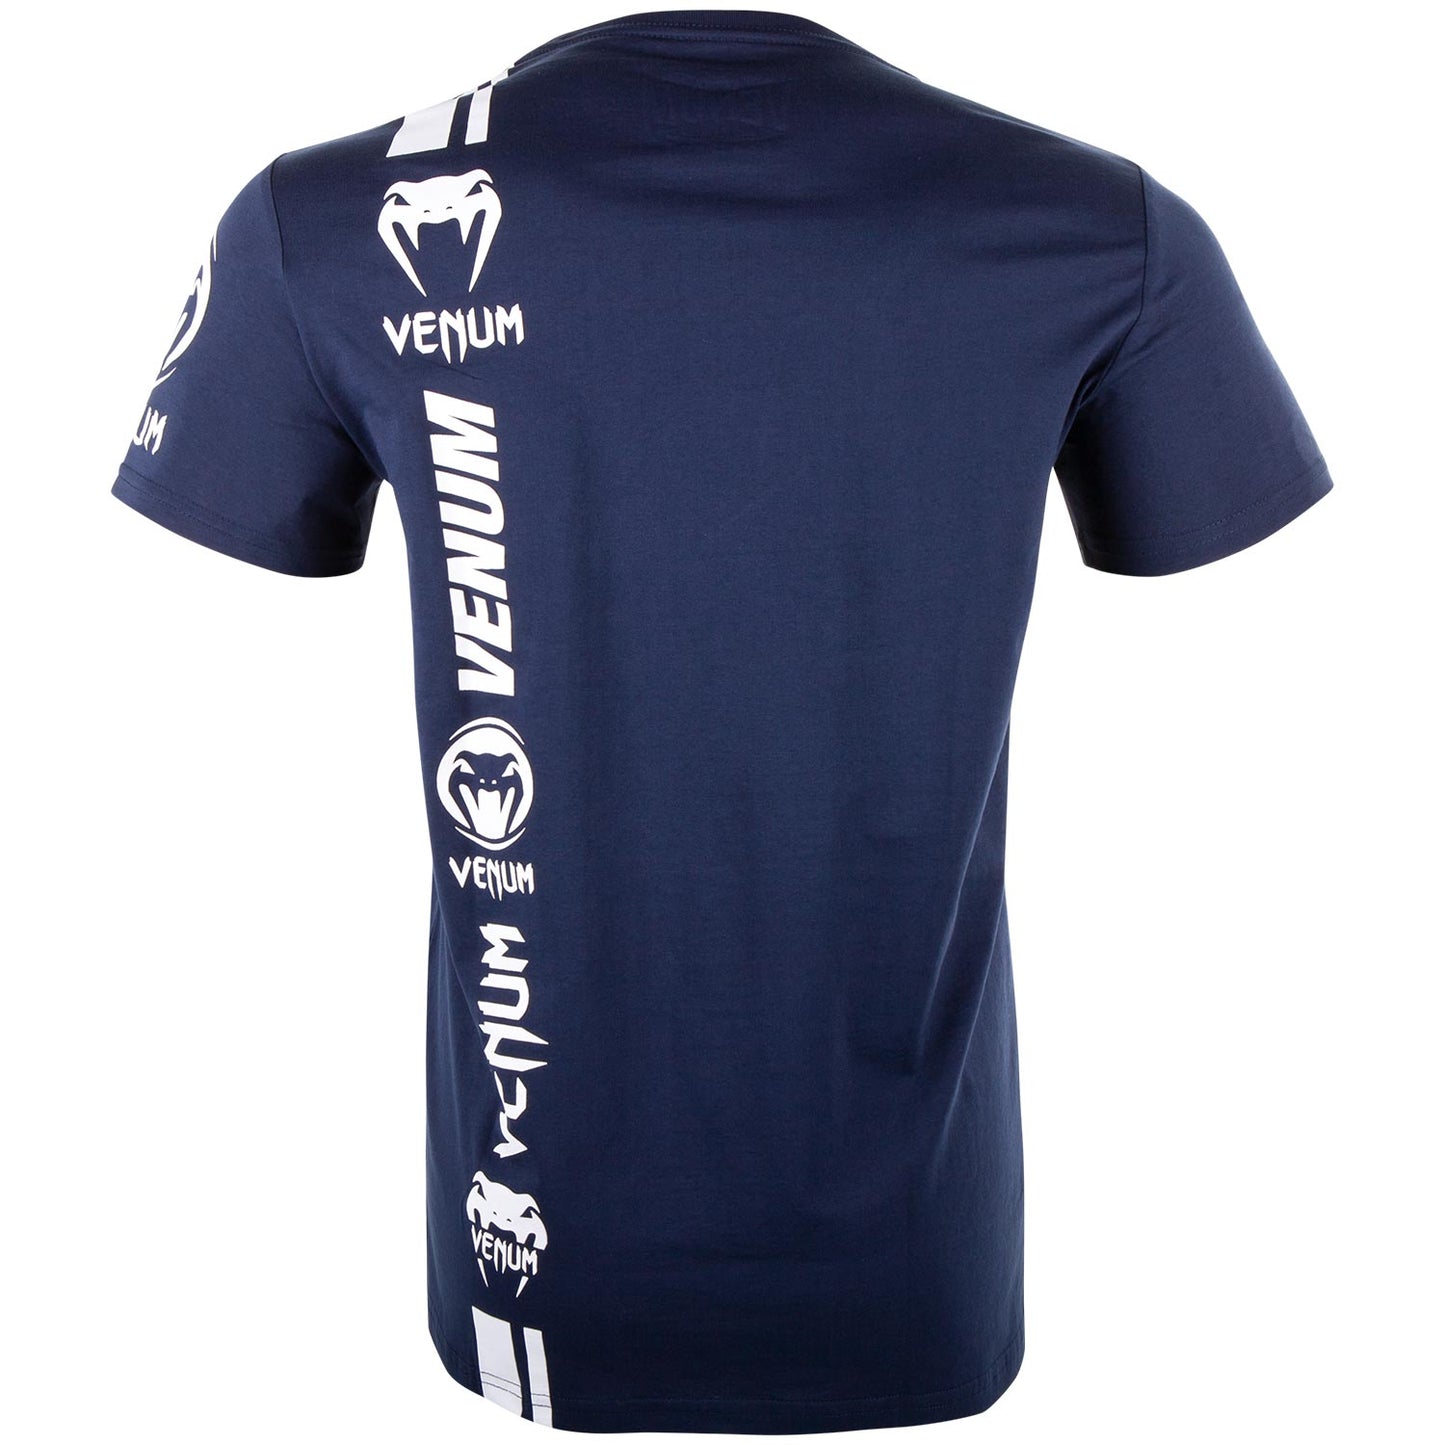 Venum Logos T-Shirt - Marineblau/Weiß